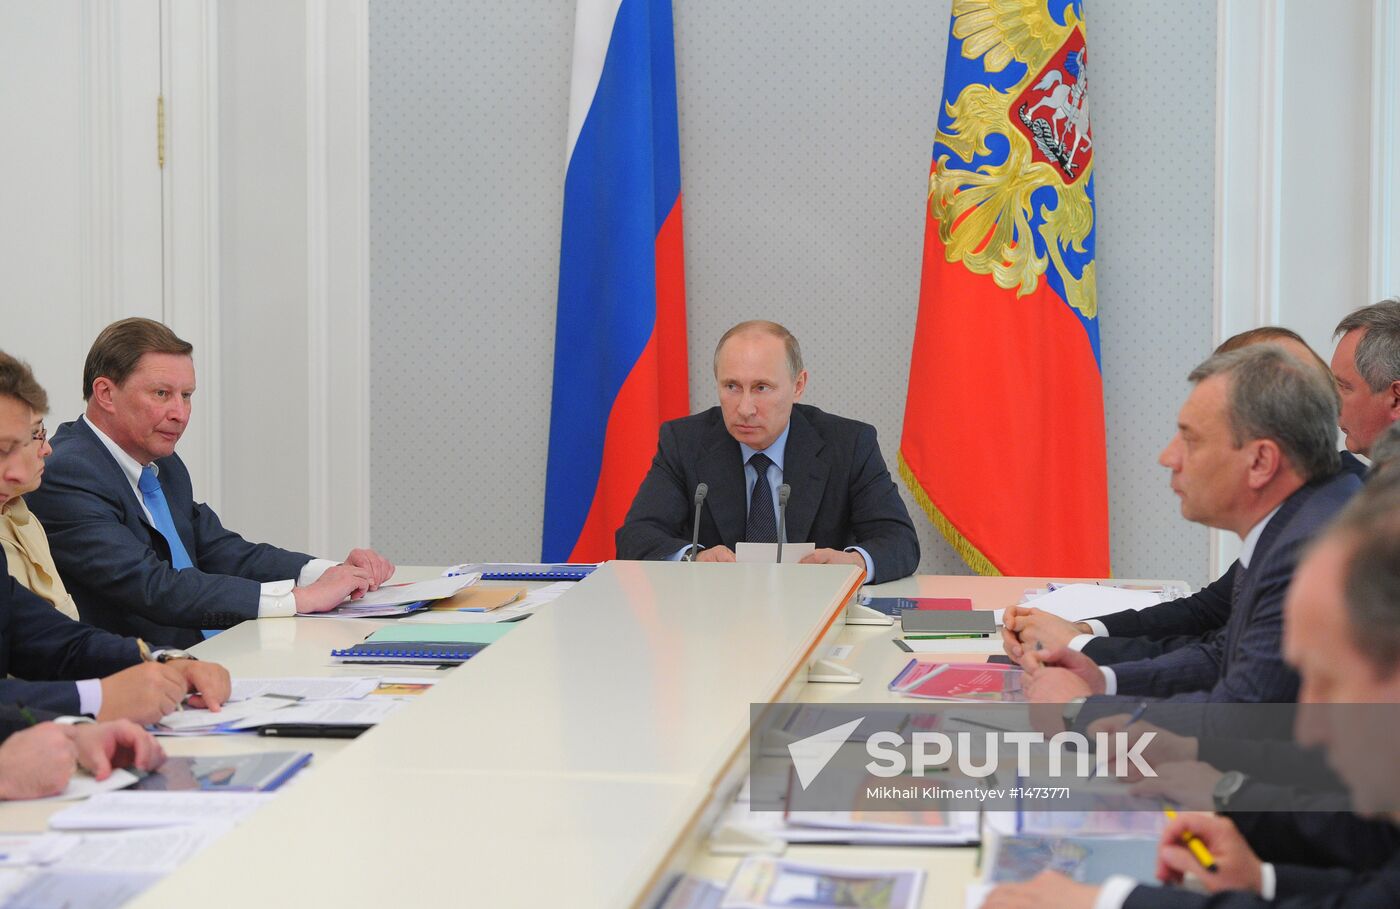 Vladimir Putin chairs meeting on OSK development